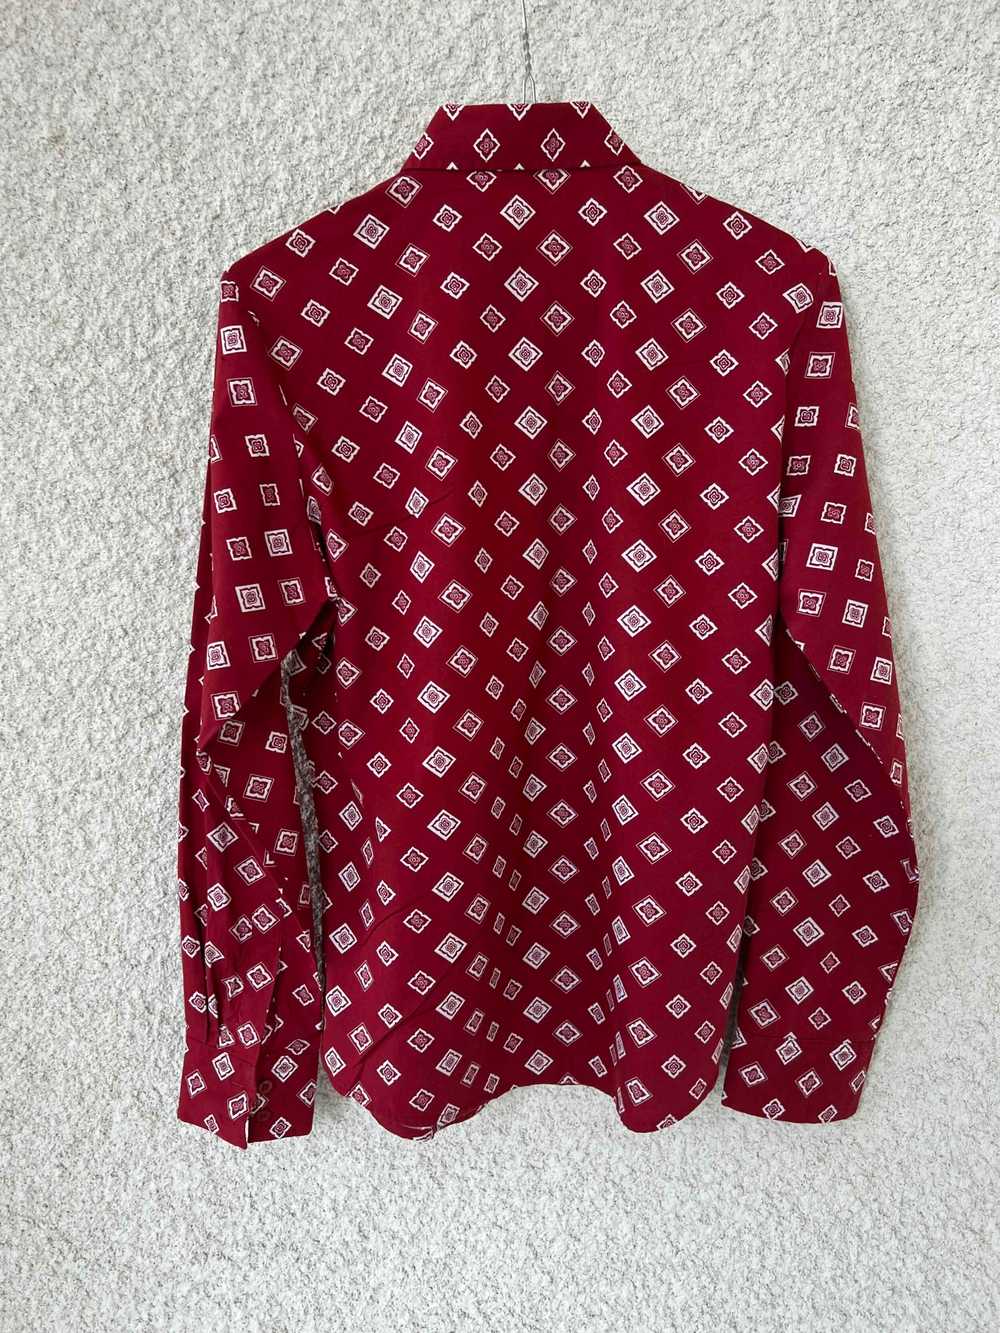 Provencal shirt - Provençal burgundy cotton blouse - image 2